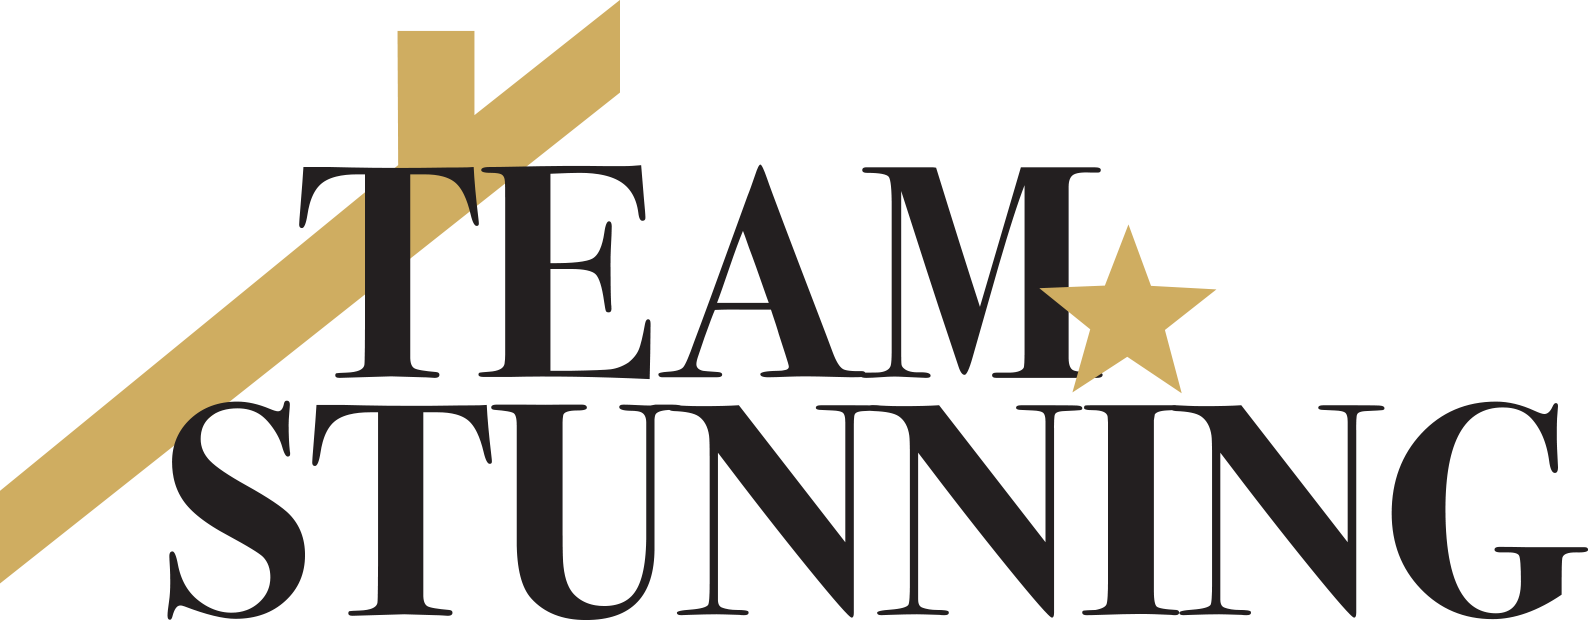 TEAMStunning logo.png